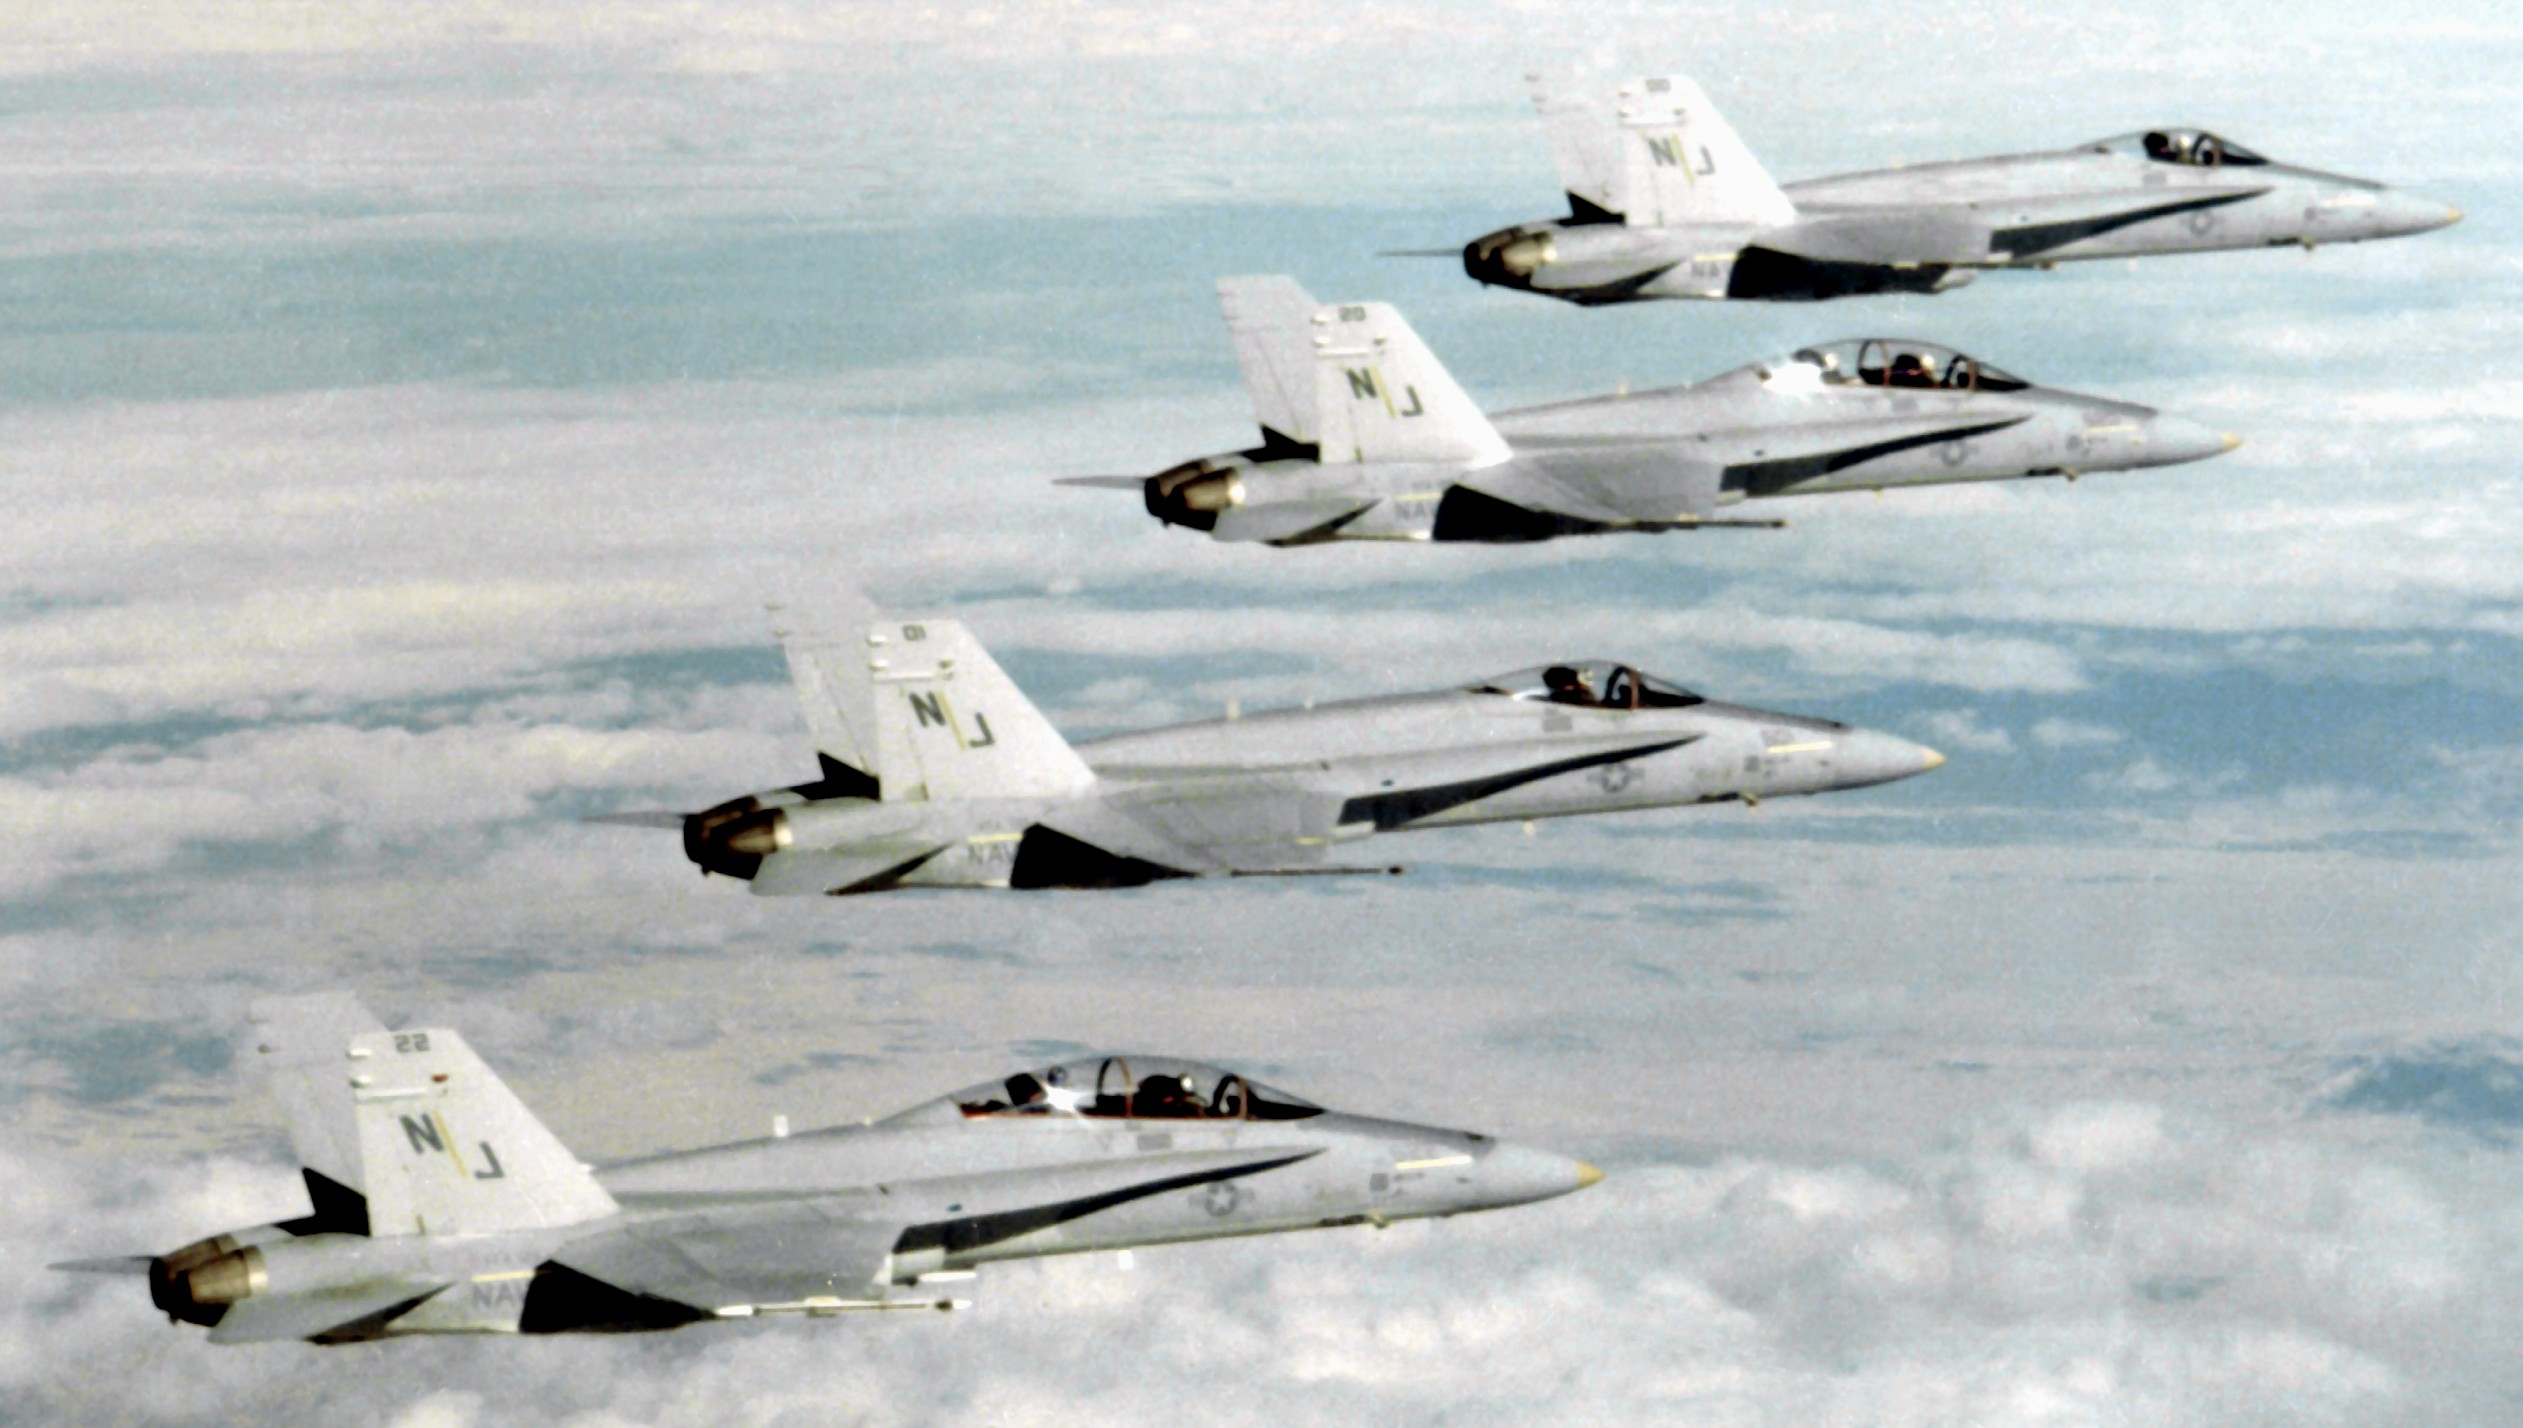 vfa-125 rough raiders strike fighter squadron f/a-18a hornet 1982 52